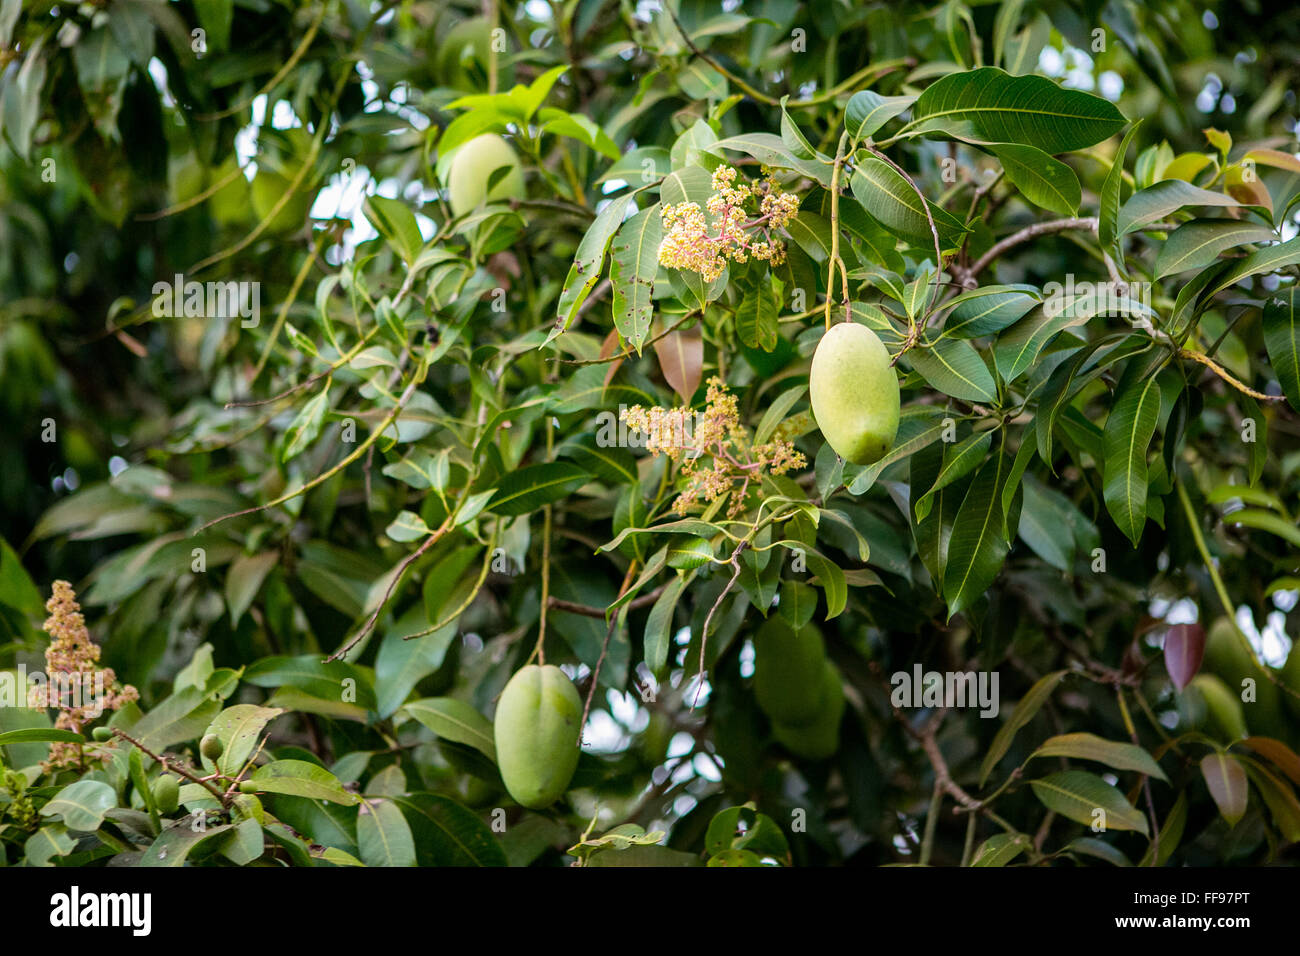 https://c8.alamy.com/comp/FF97PT/mangoes-on-a-tree-FF97PT.jpg